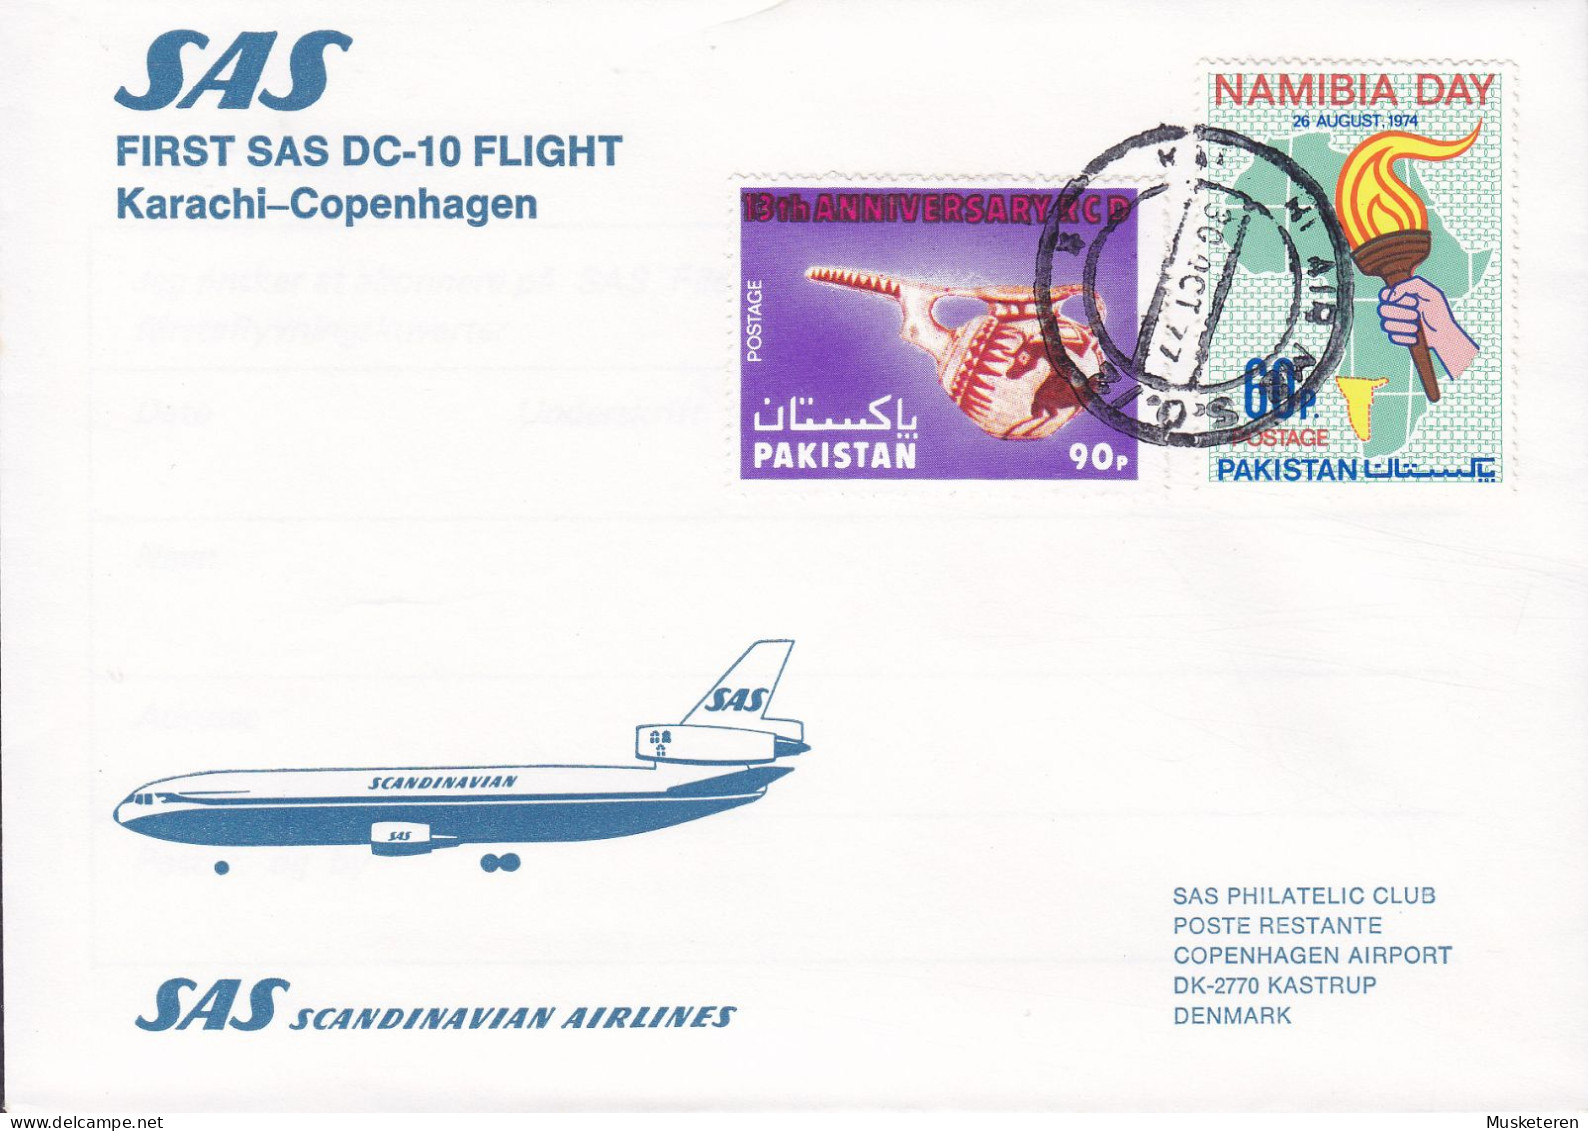 Pakistan First SAS DC-10 Flight Flight KARACHI-COPENHAGEN 1977 Cover Brief Lettre Namibia Day Torch Stamp - Pakistan